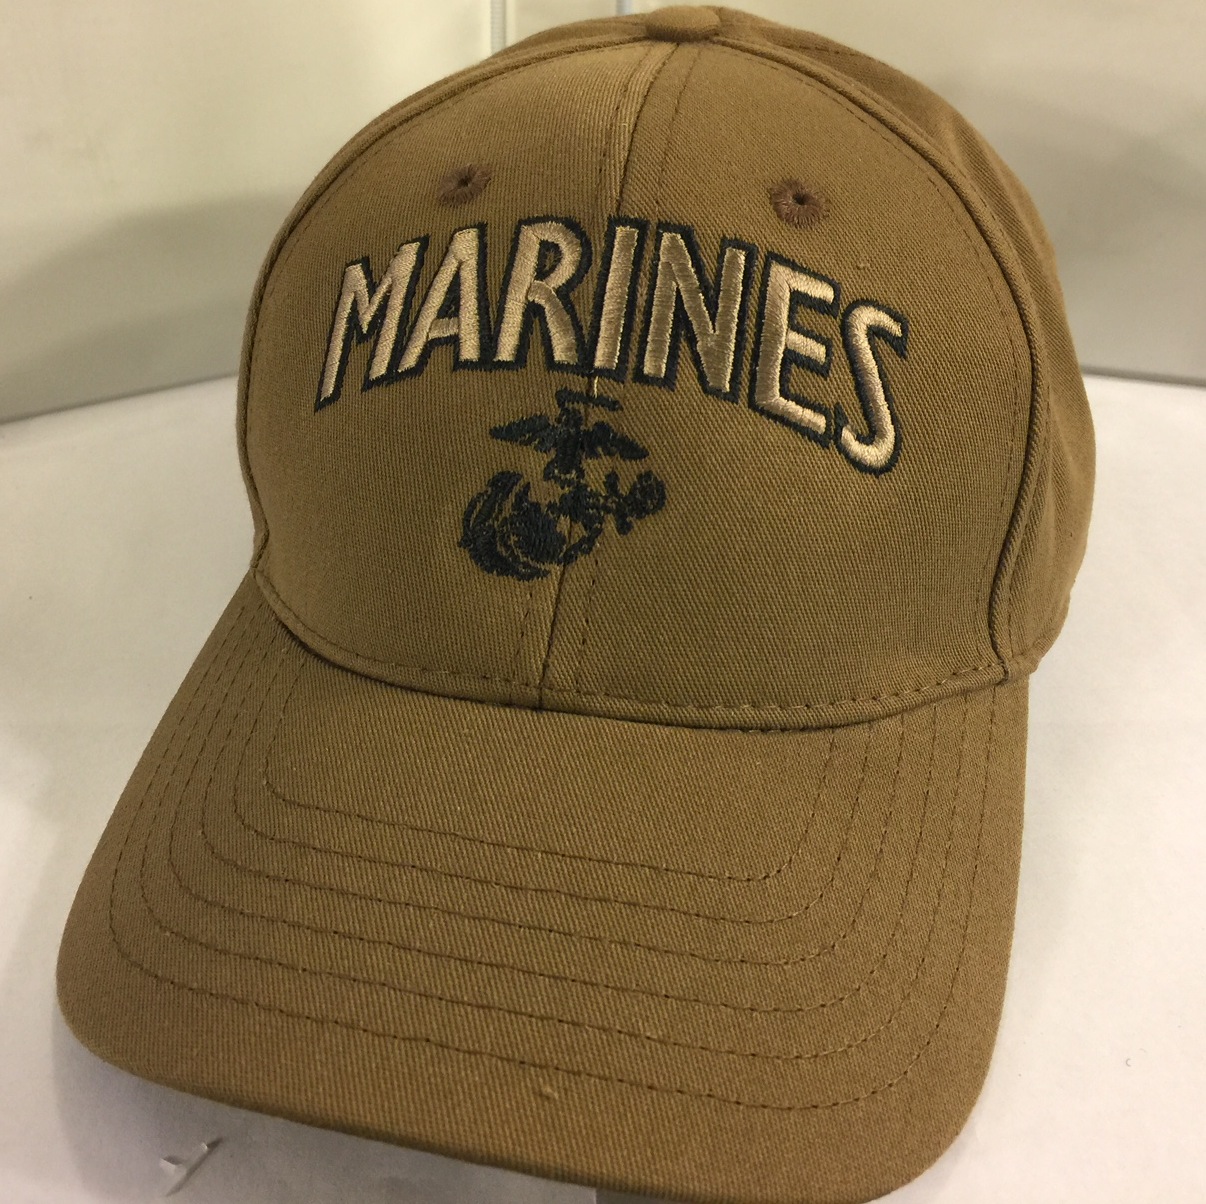 USMC MARINES Ballcap (Coyote Brown)